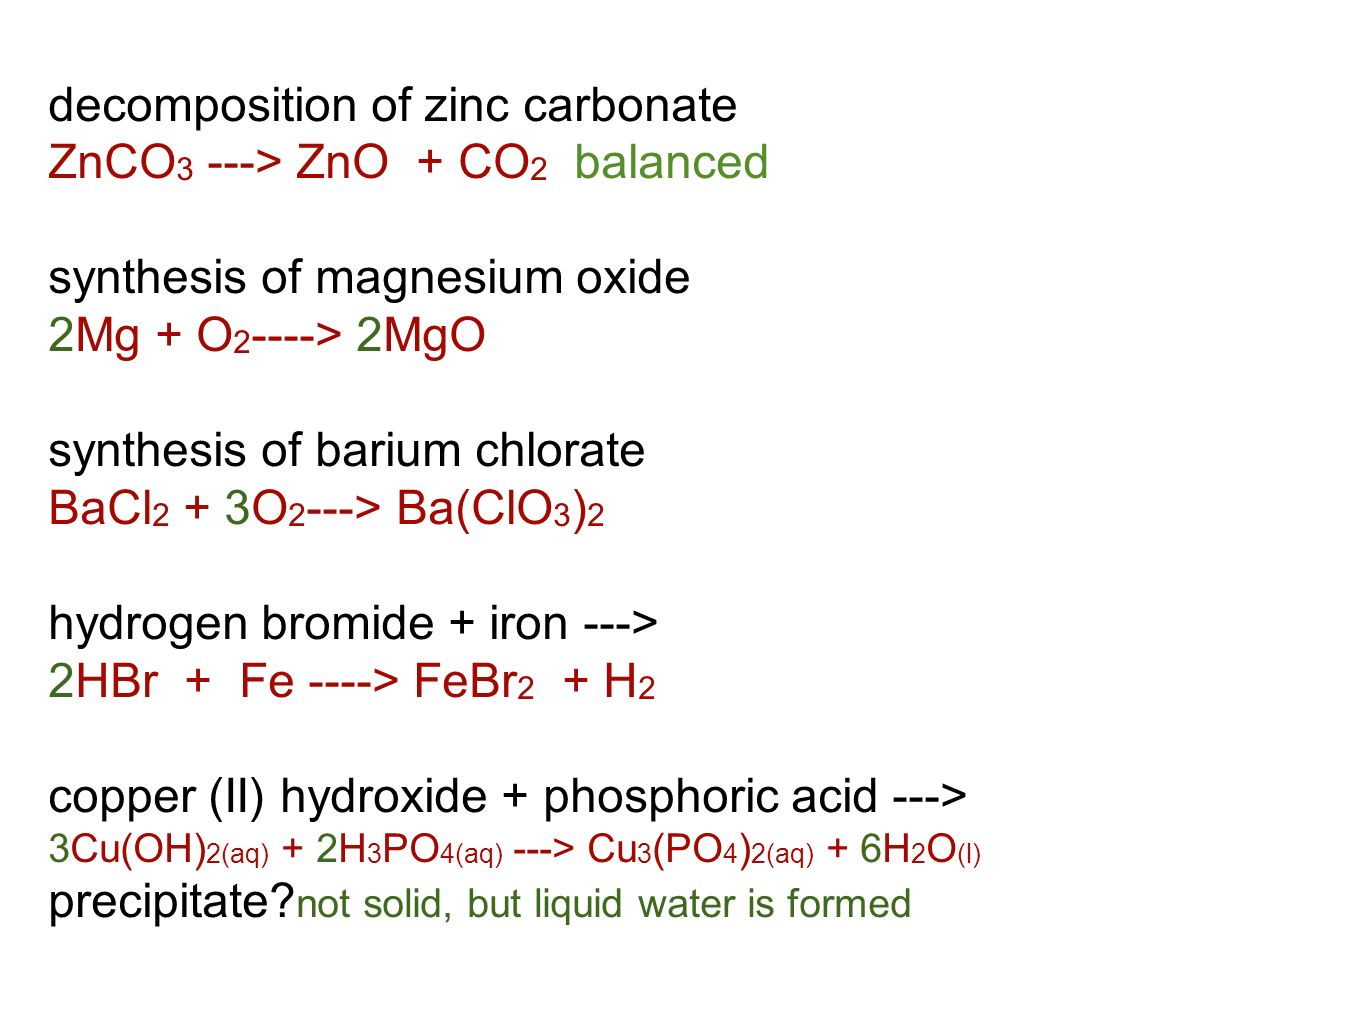 Mgo zno реакция. Znco3 ZNO co2. Co2 → znco3. ZNO+co2 уравнение. Znco3-ZNO-ZN.